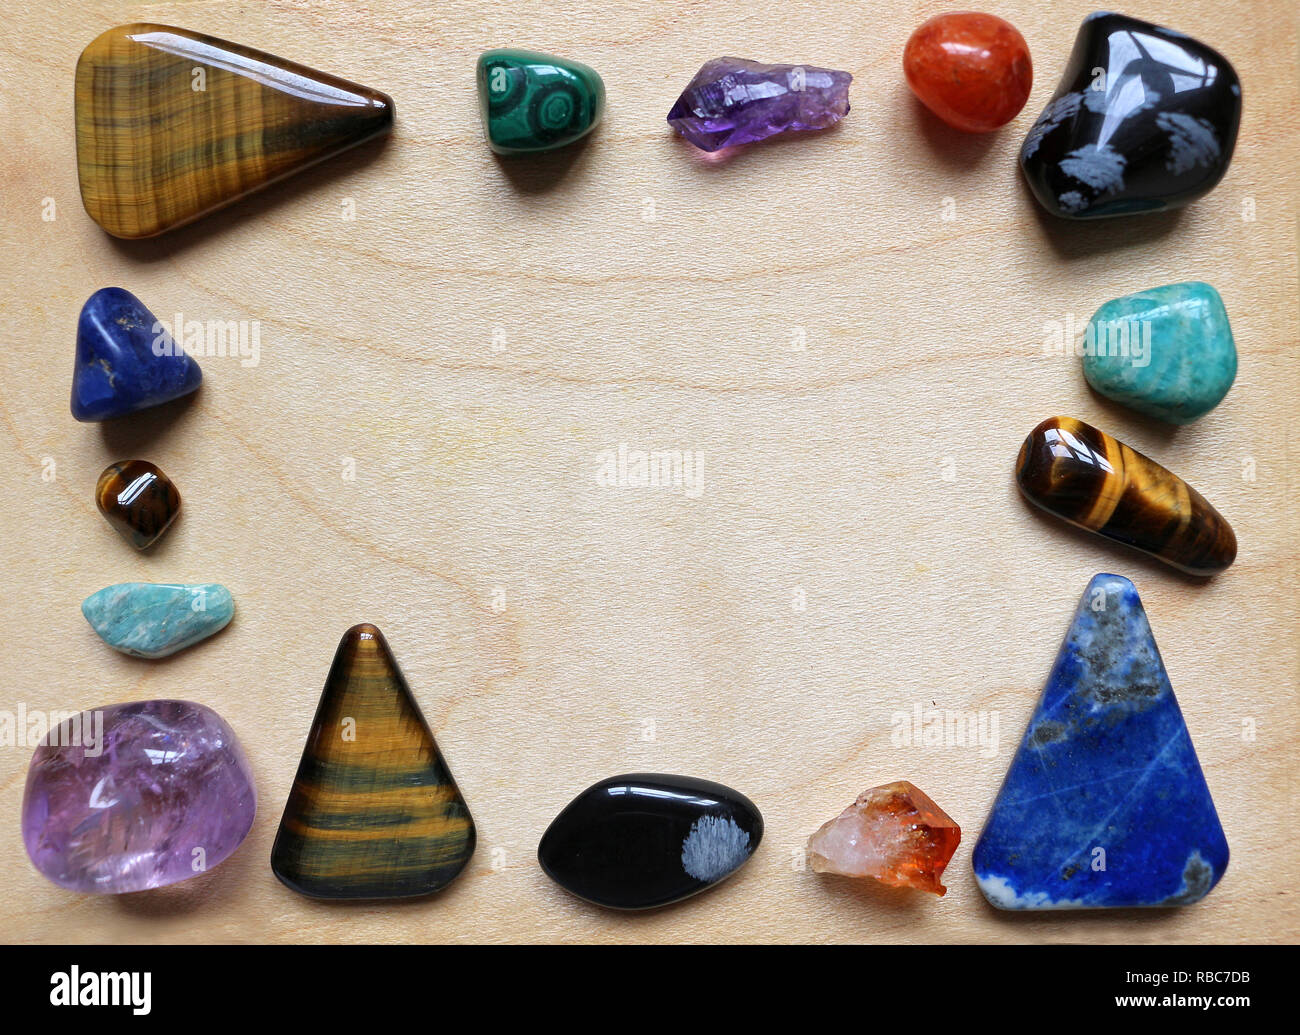 Tumbled Gemstones Identification Chart